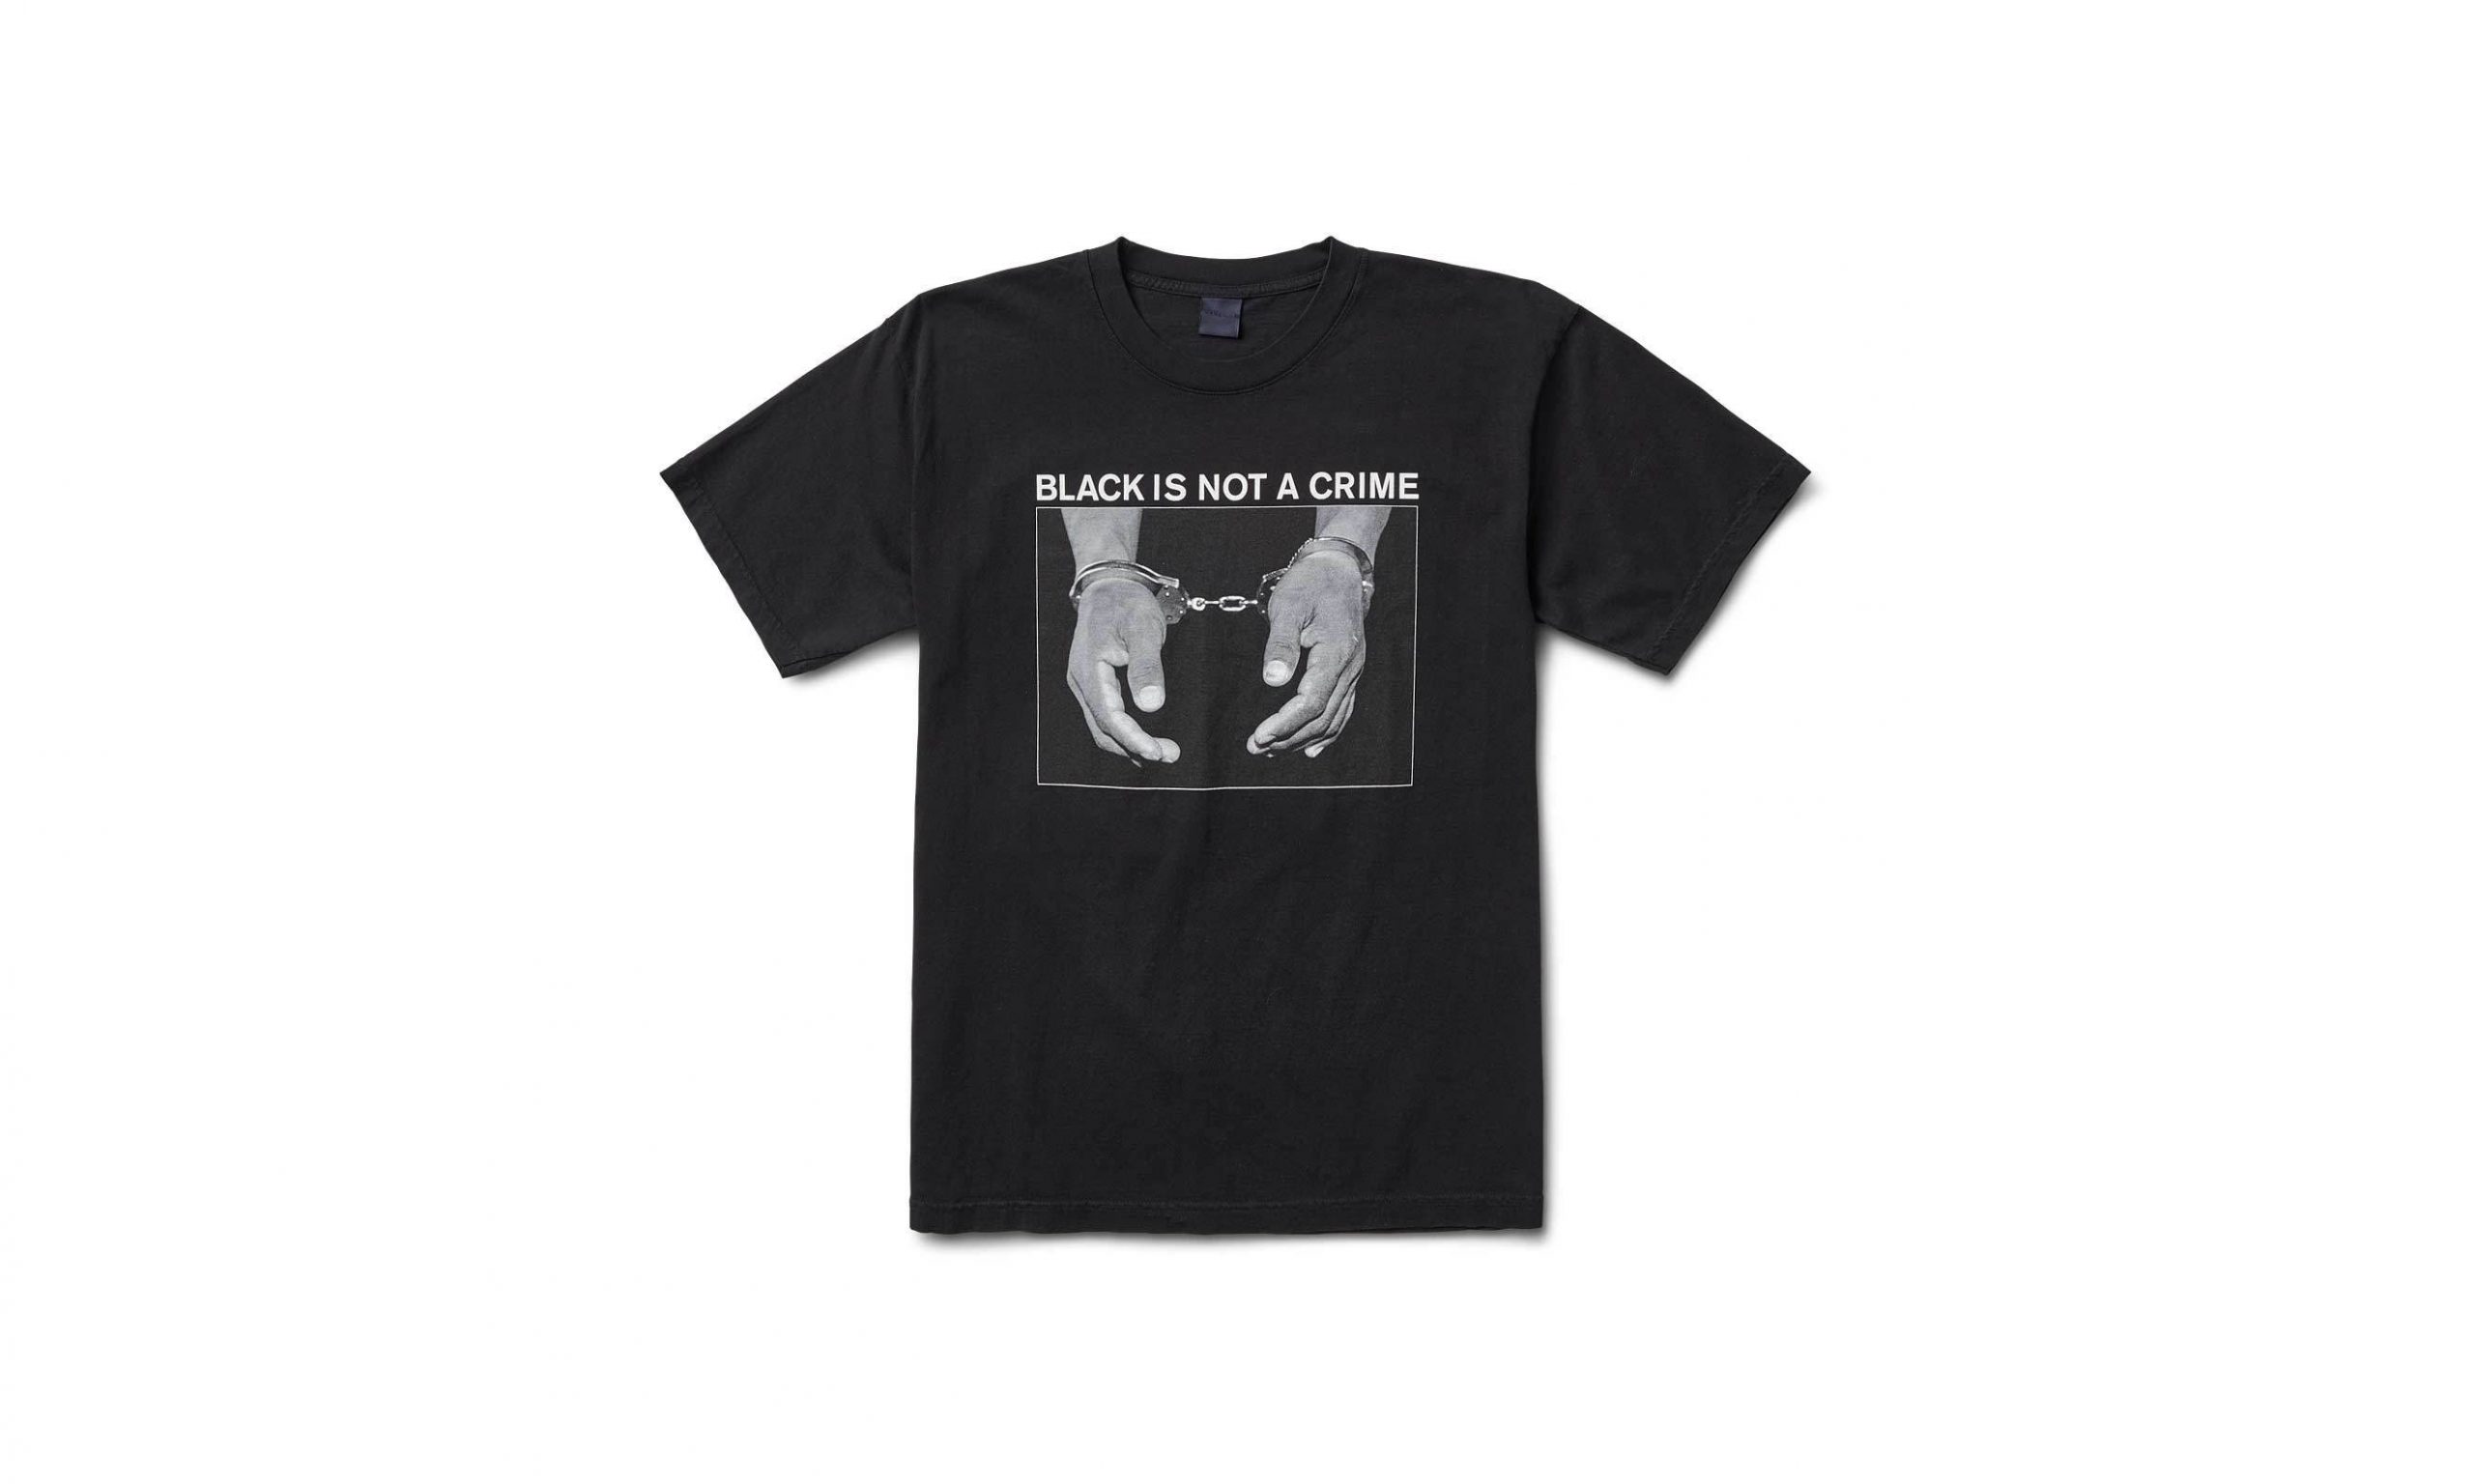 Freshjive 用新 T-Shirt 来向最近的黑人歧视案件表态